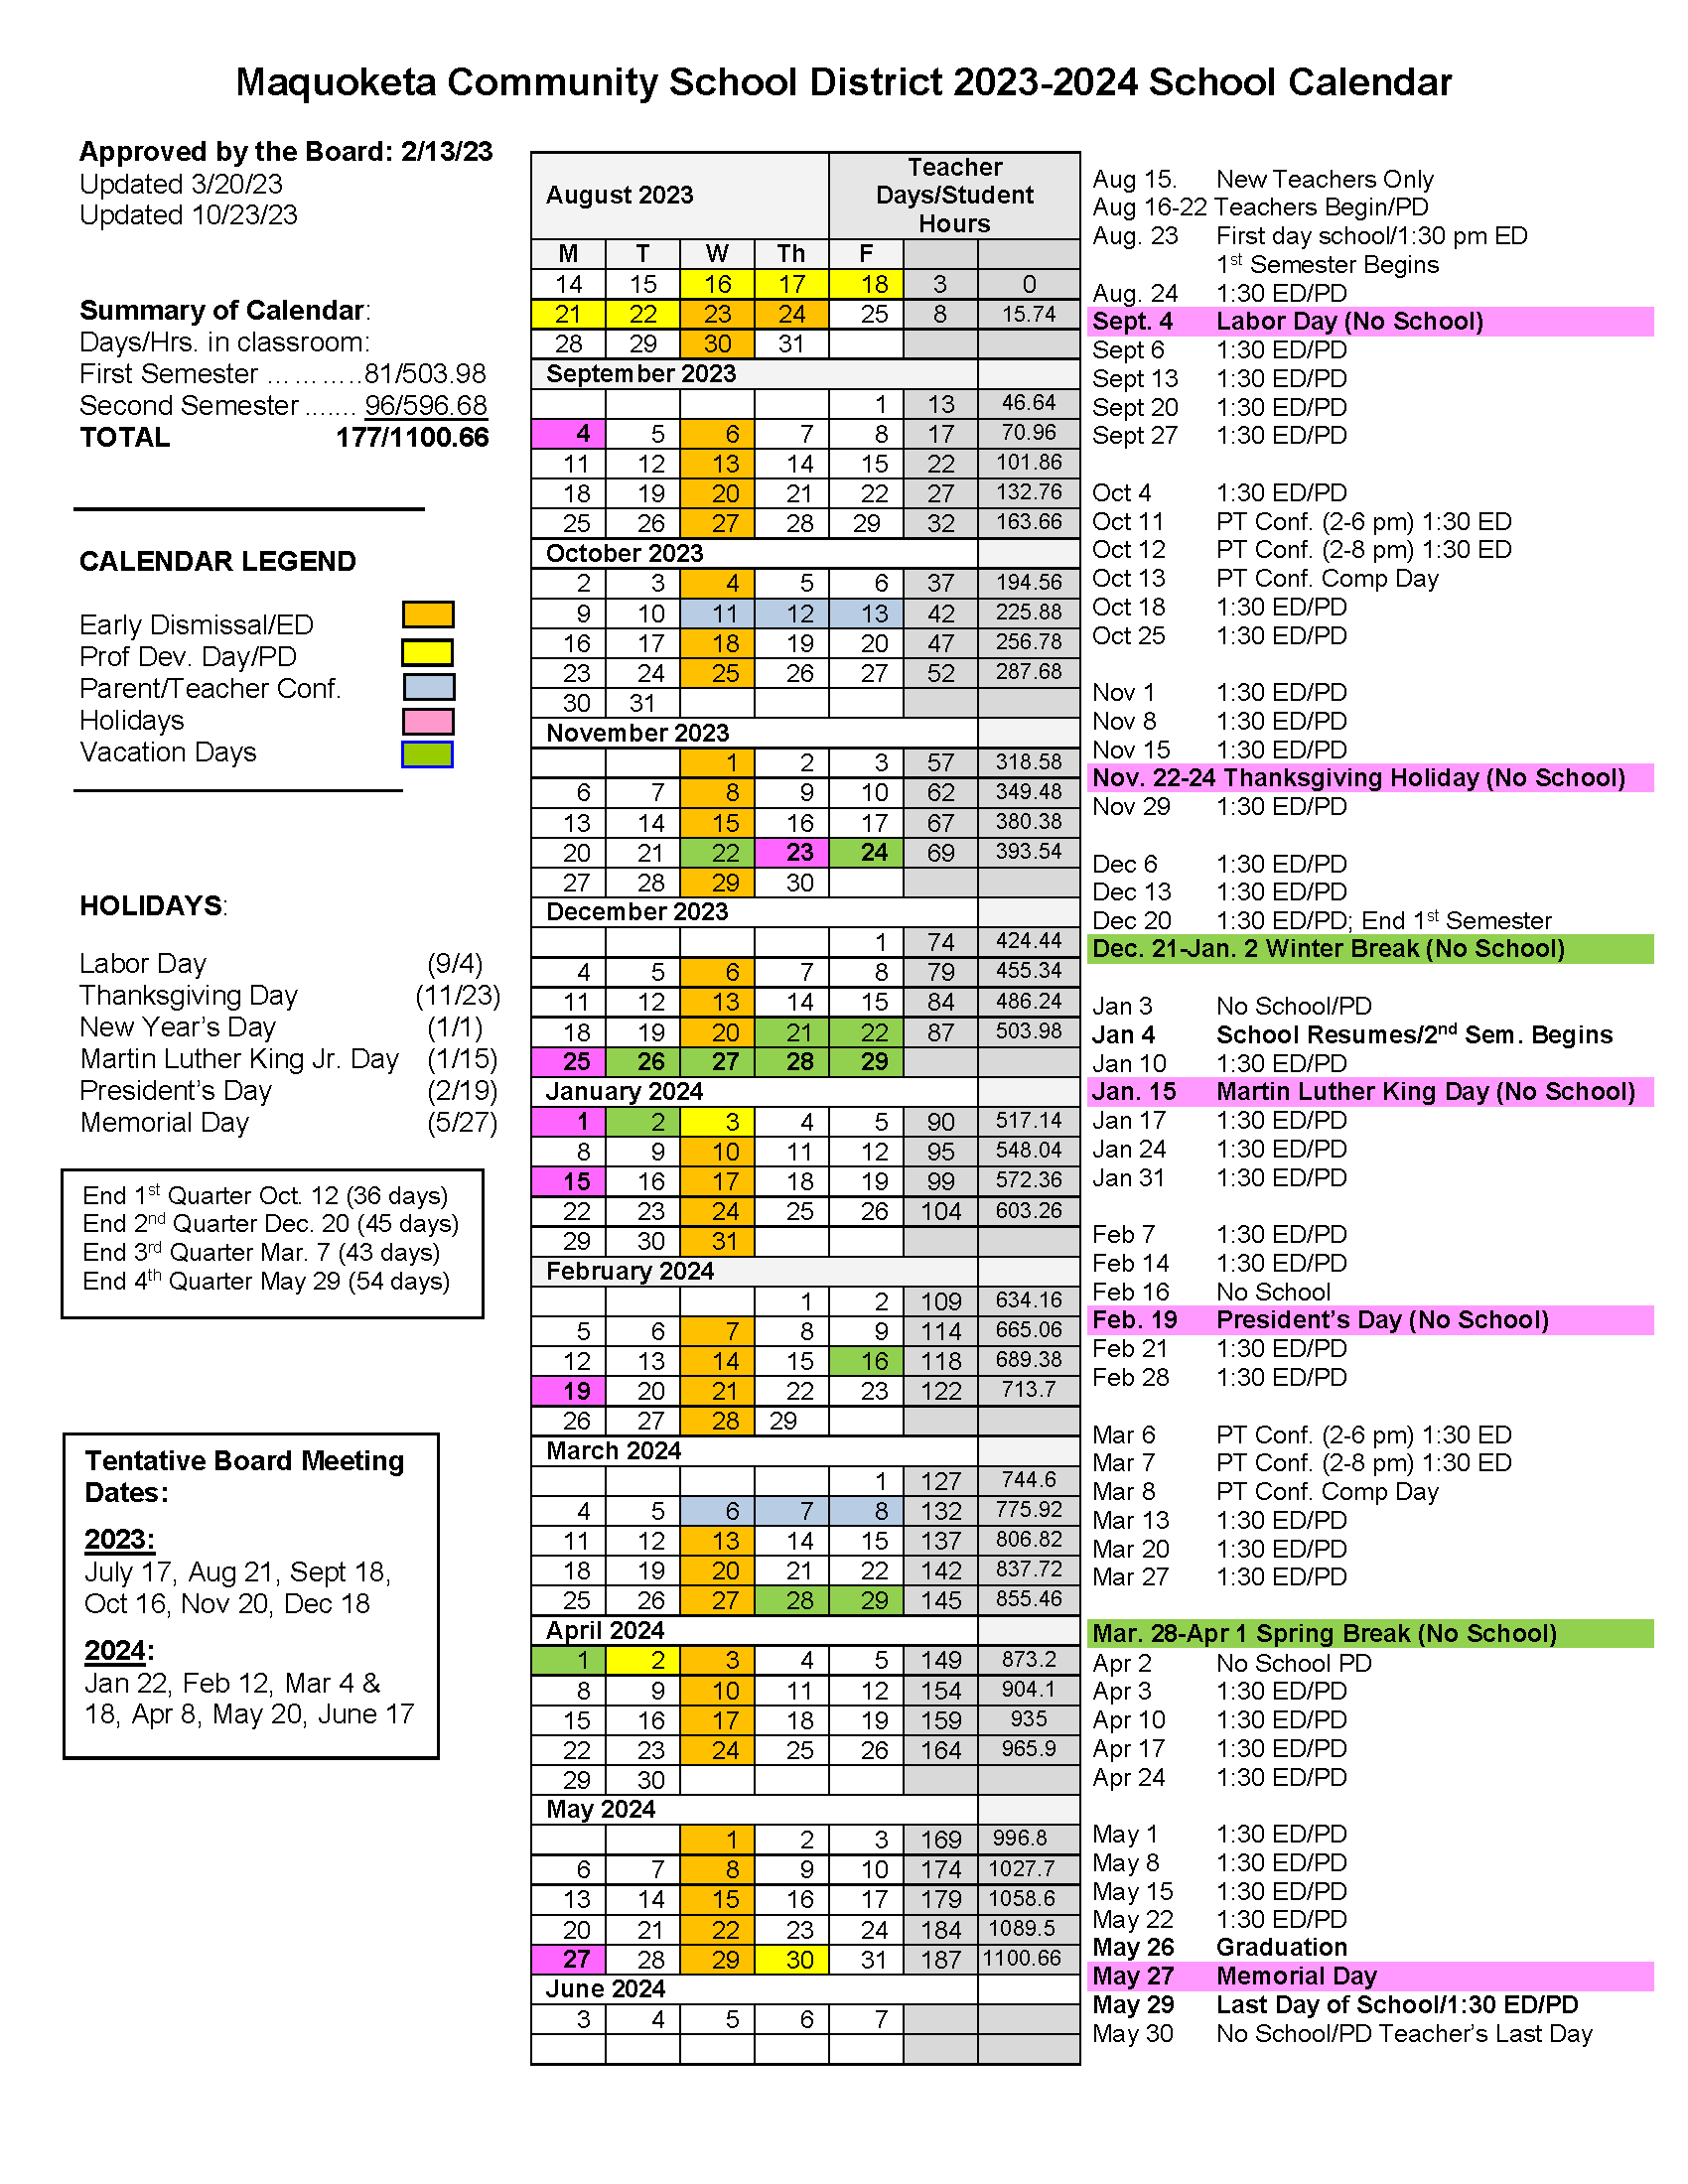 23-24 School Calendar Updated 10-23-23 Graduation